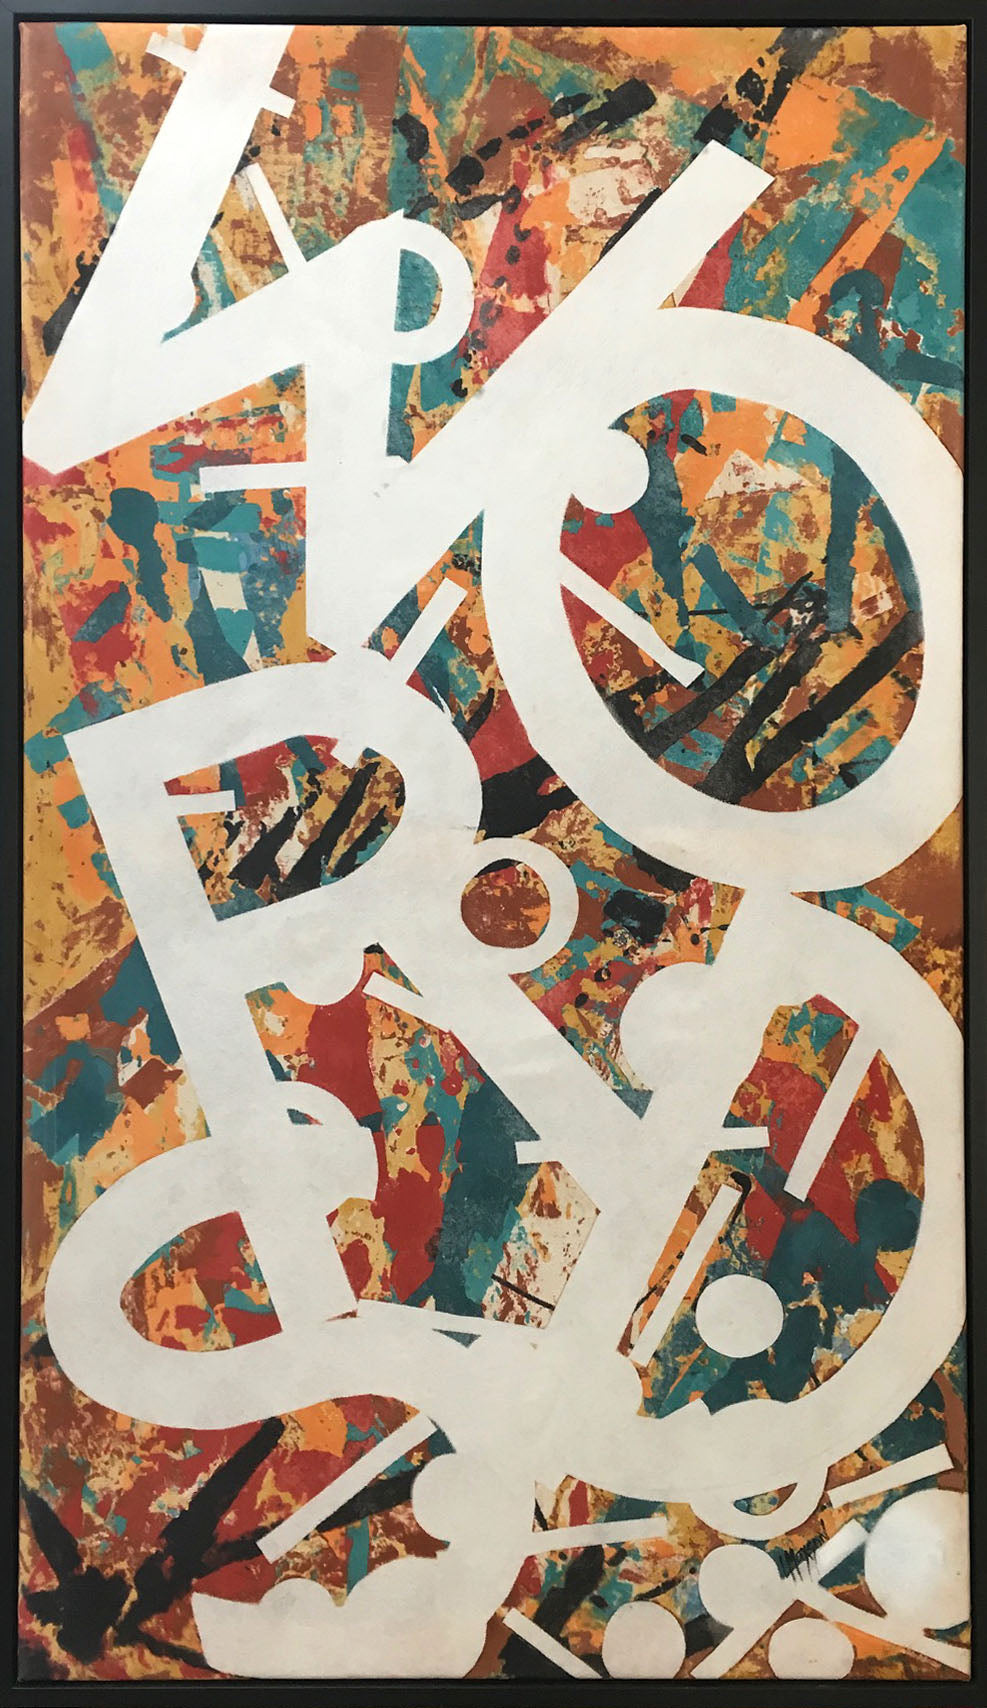 STICKS AND STONES, Clay Monoprint, Framed, 45"H x 26"W x 2"D, 2015